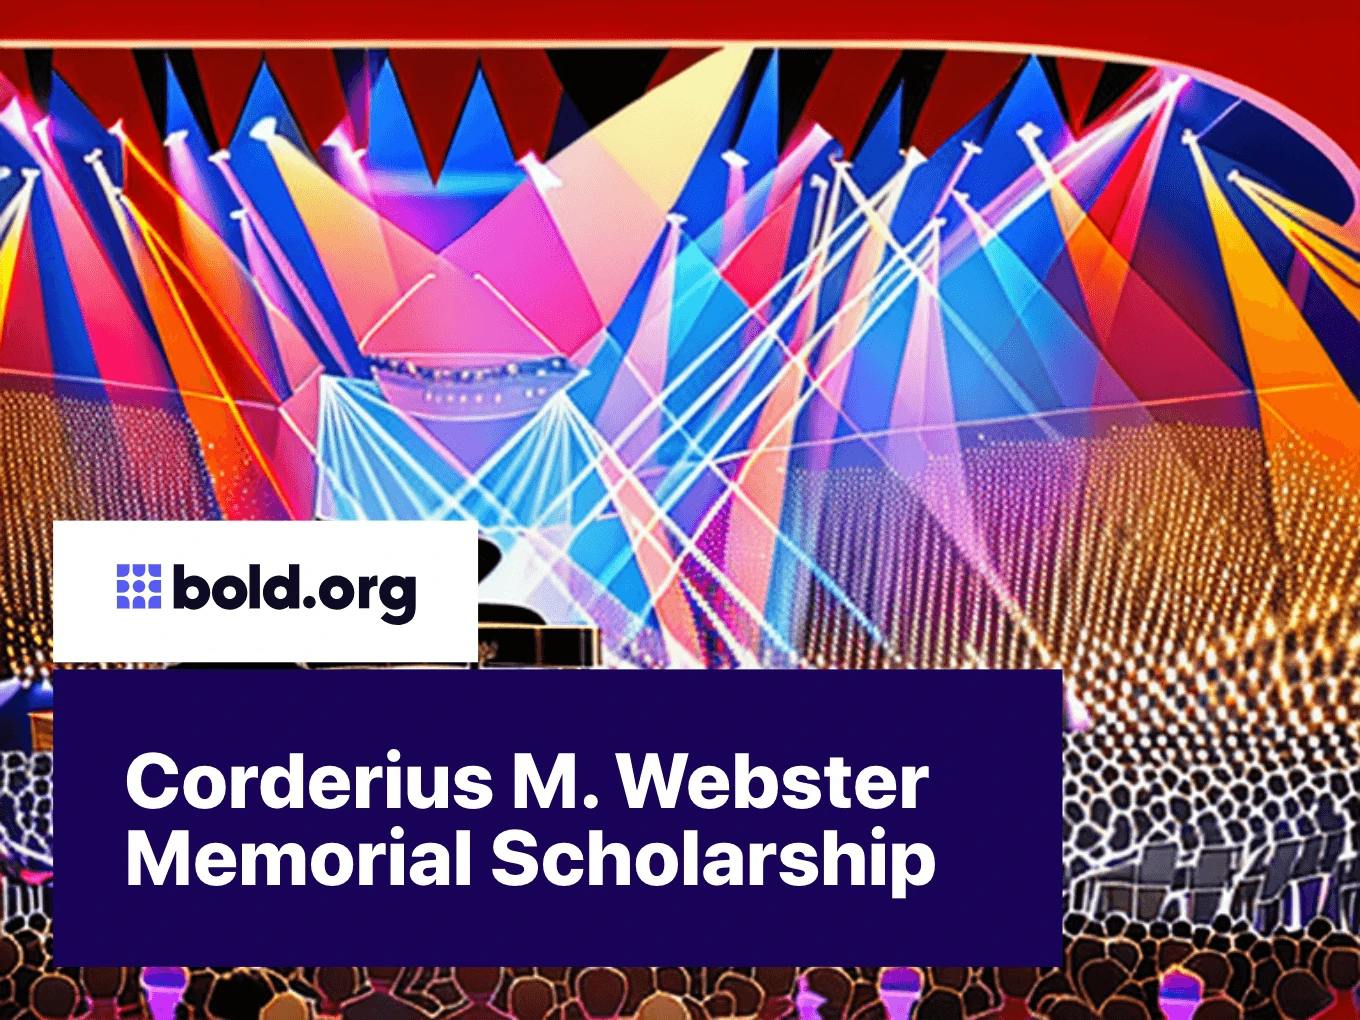 Corderius M. Webster Memorial Scholarship